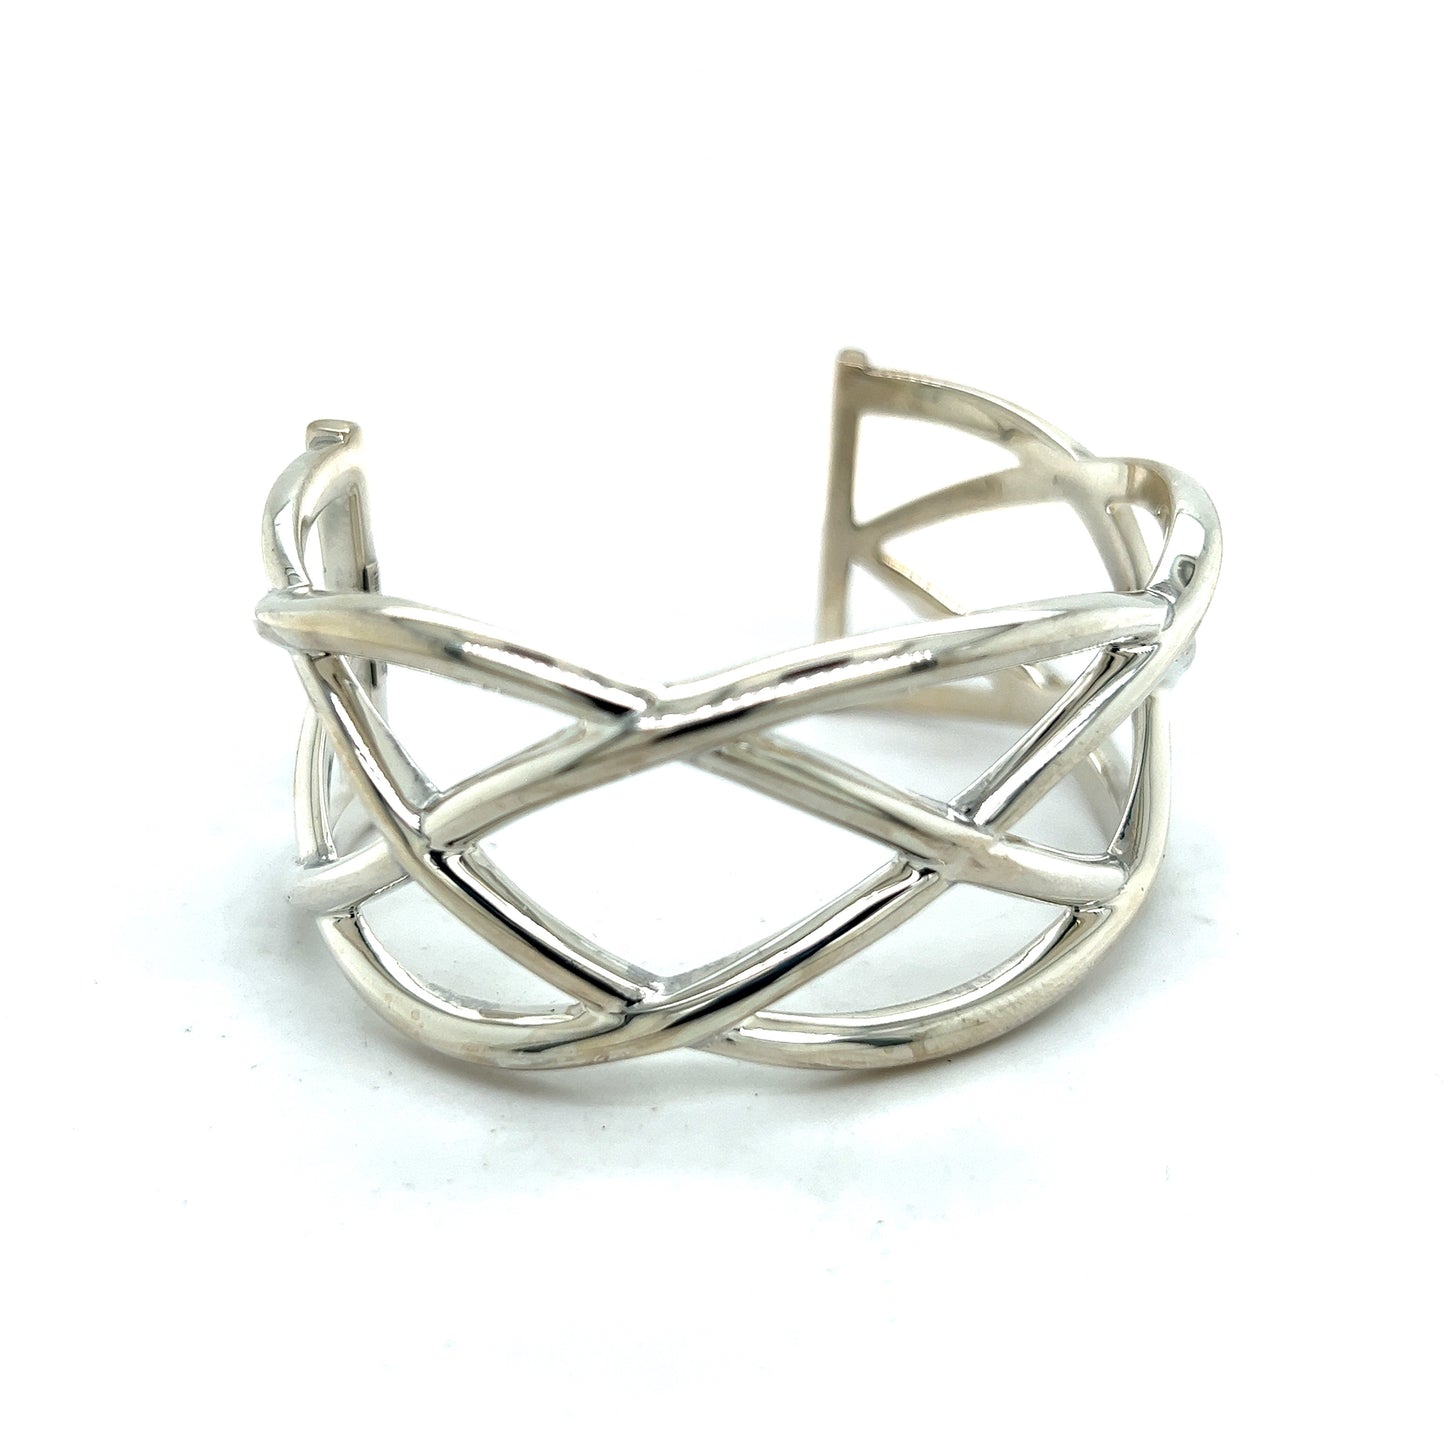 Tiffany & Co Authentic Estate Large Celtic Knot Cuff Bracelet 7.5" Medium Silver TIF373 - Certified Fine Jewelry